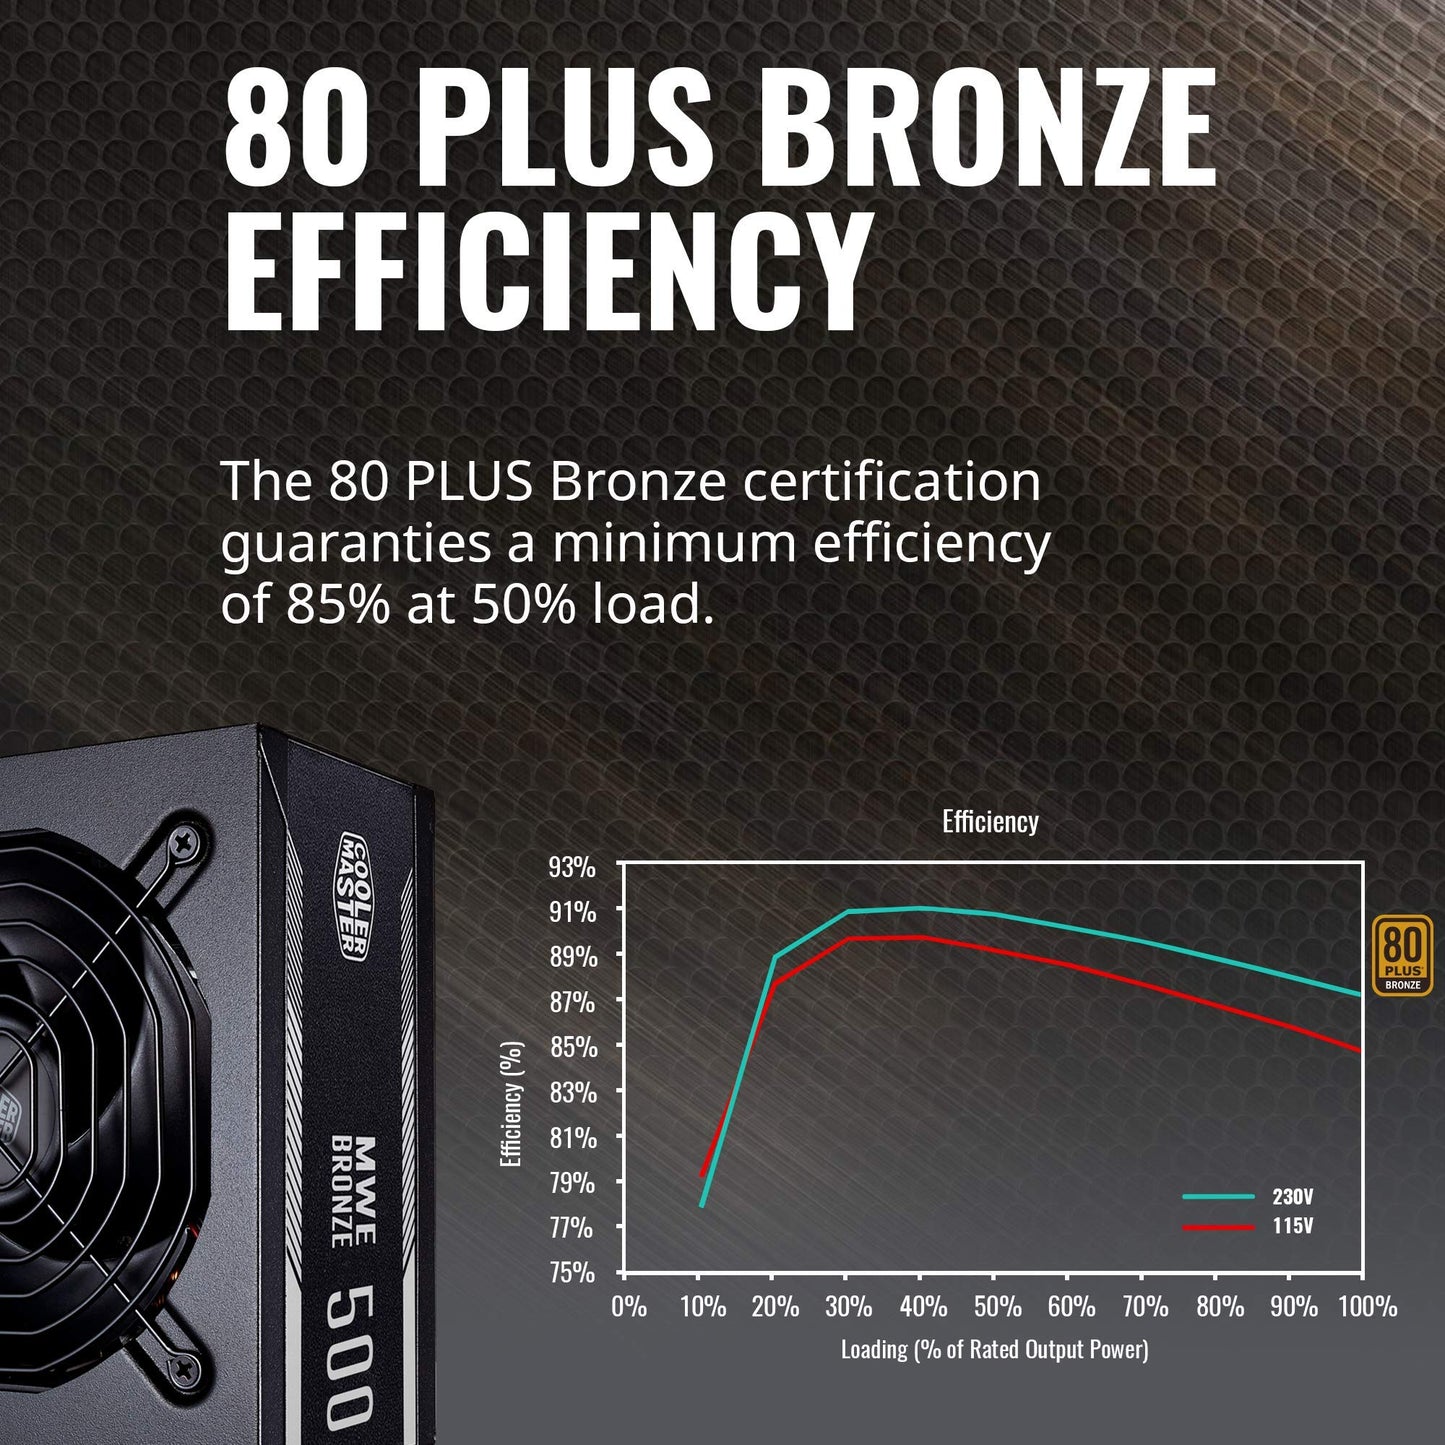 Cooler Master MWE Bronze 500 Watt 80 Plus Certified Power Supply, 3 Year Warranty - CaveHubs